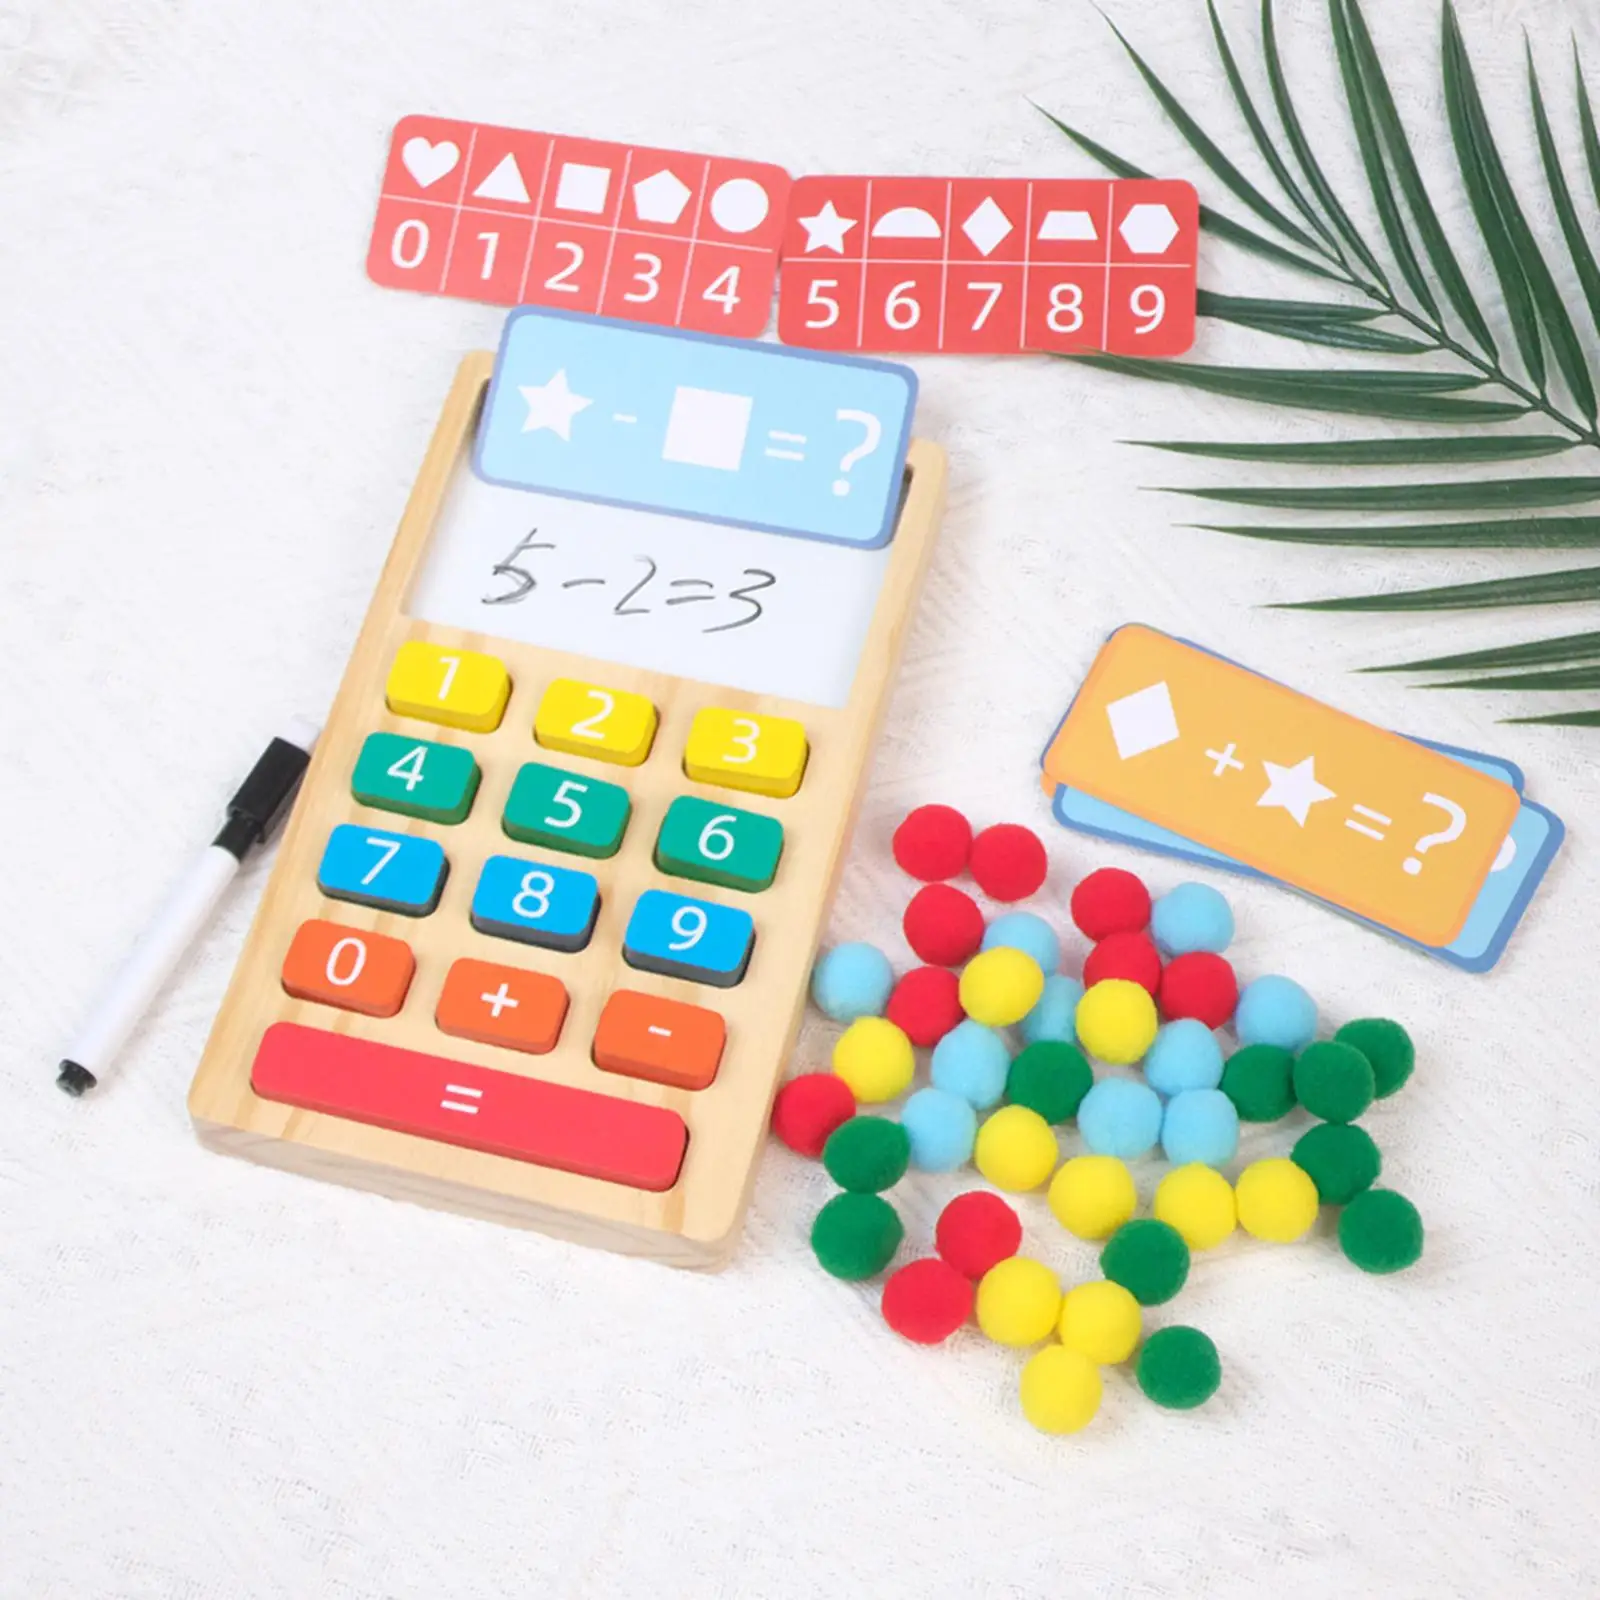 Wooden Calculator Addition Subtraction Montessori Toy Early Math Educational for Preschool Homeschool Birthday Gift kids